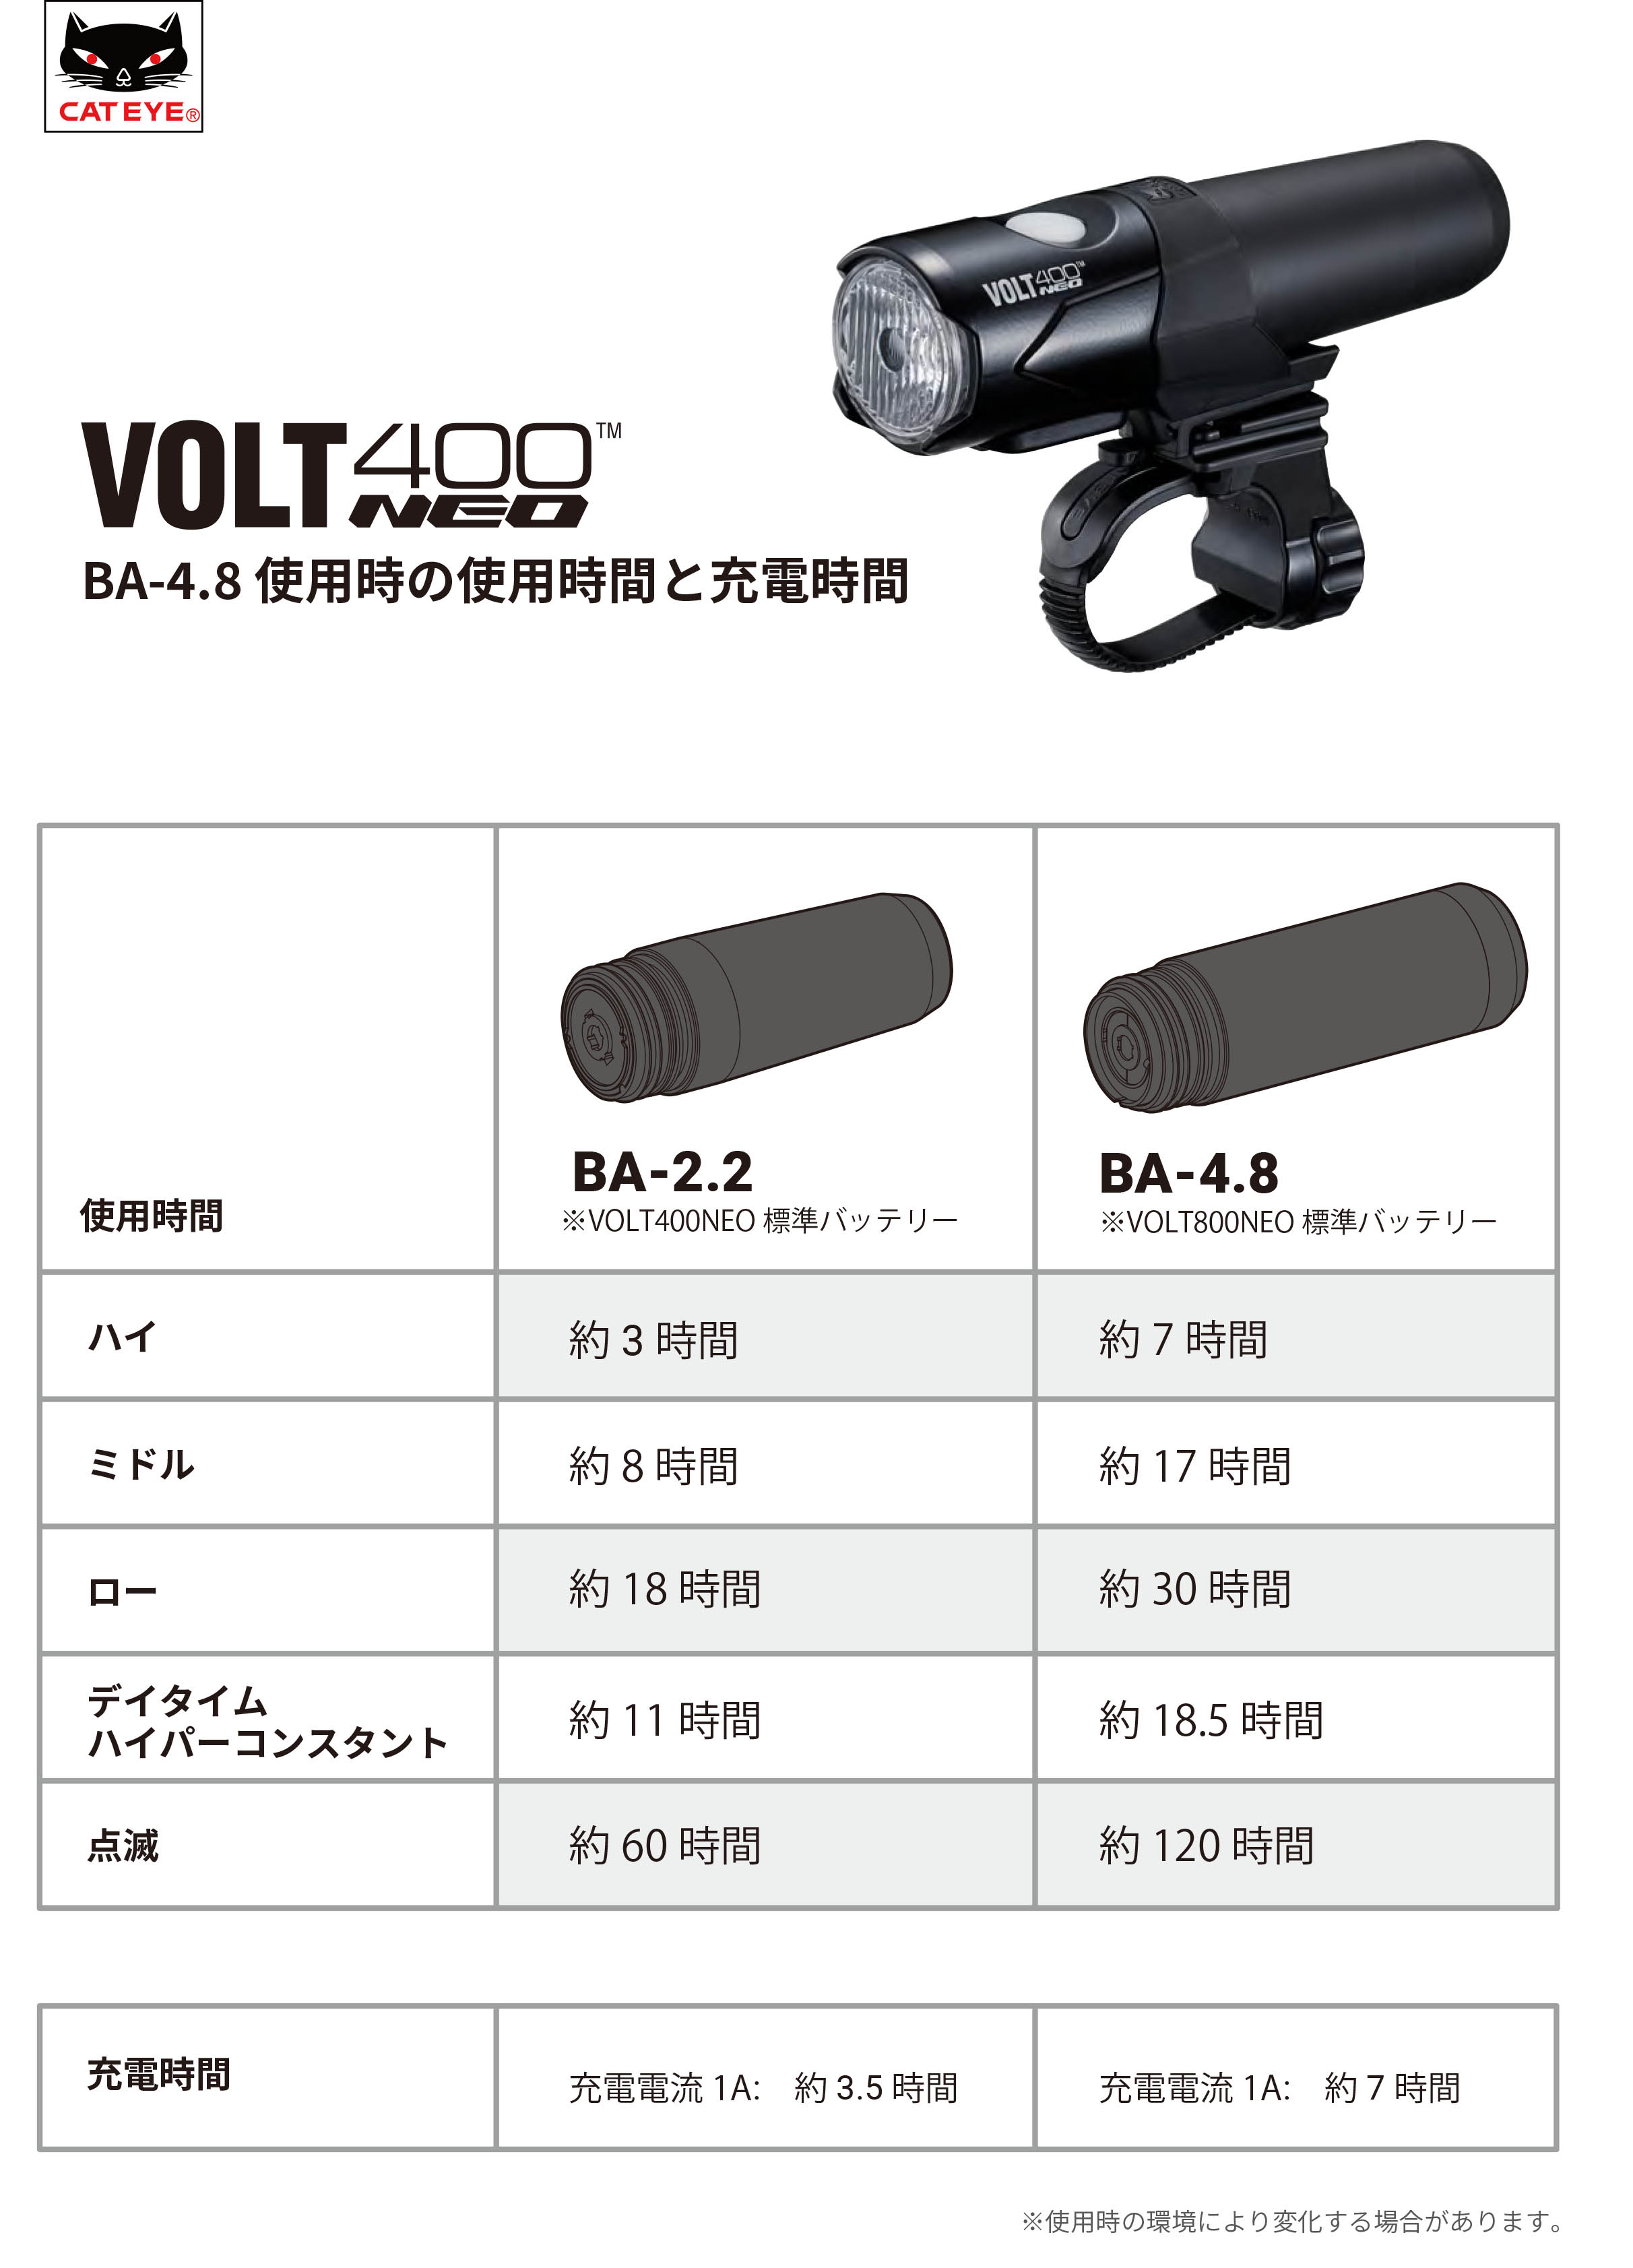 VOLT400 NEO | 製品情報 | CATEYE（キャットアイ）